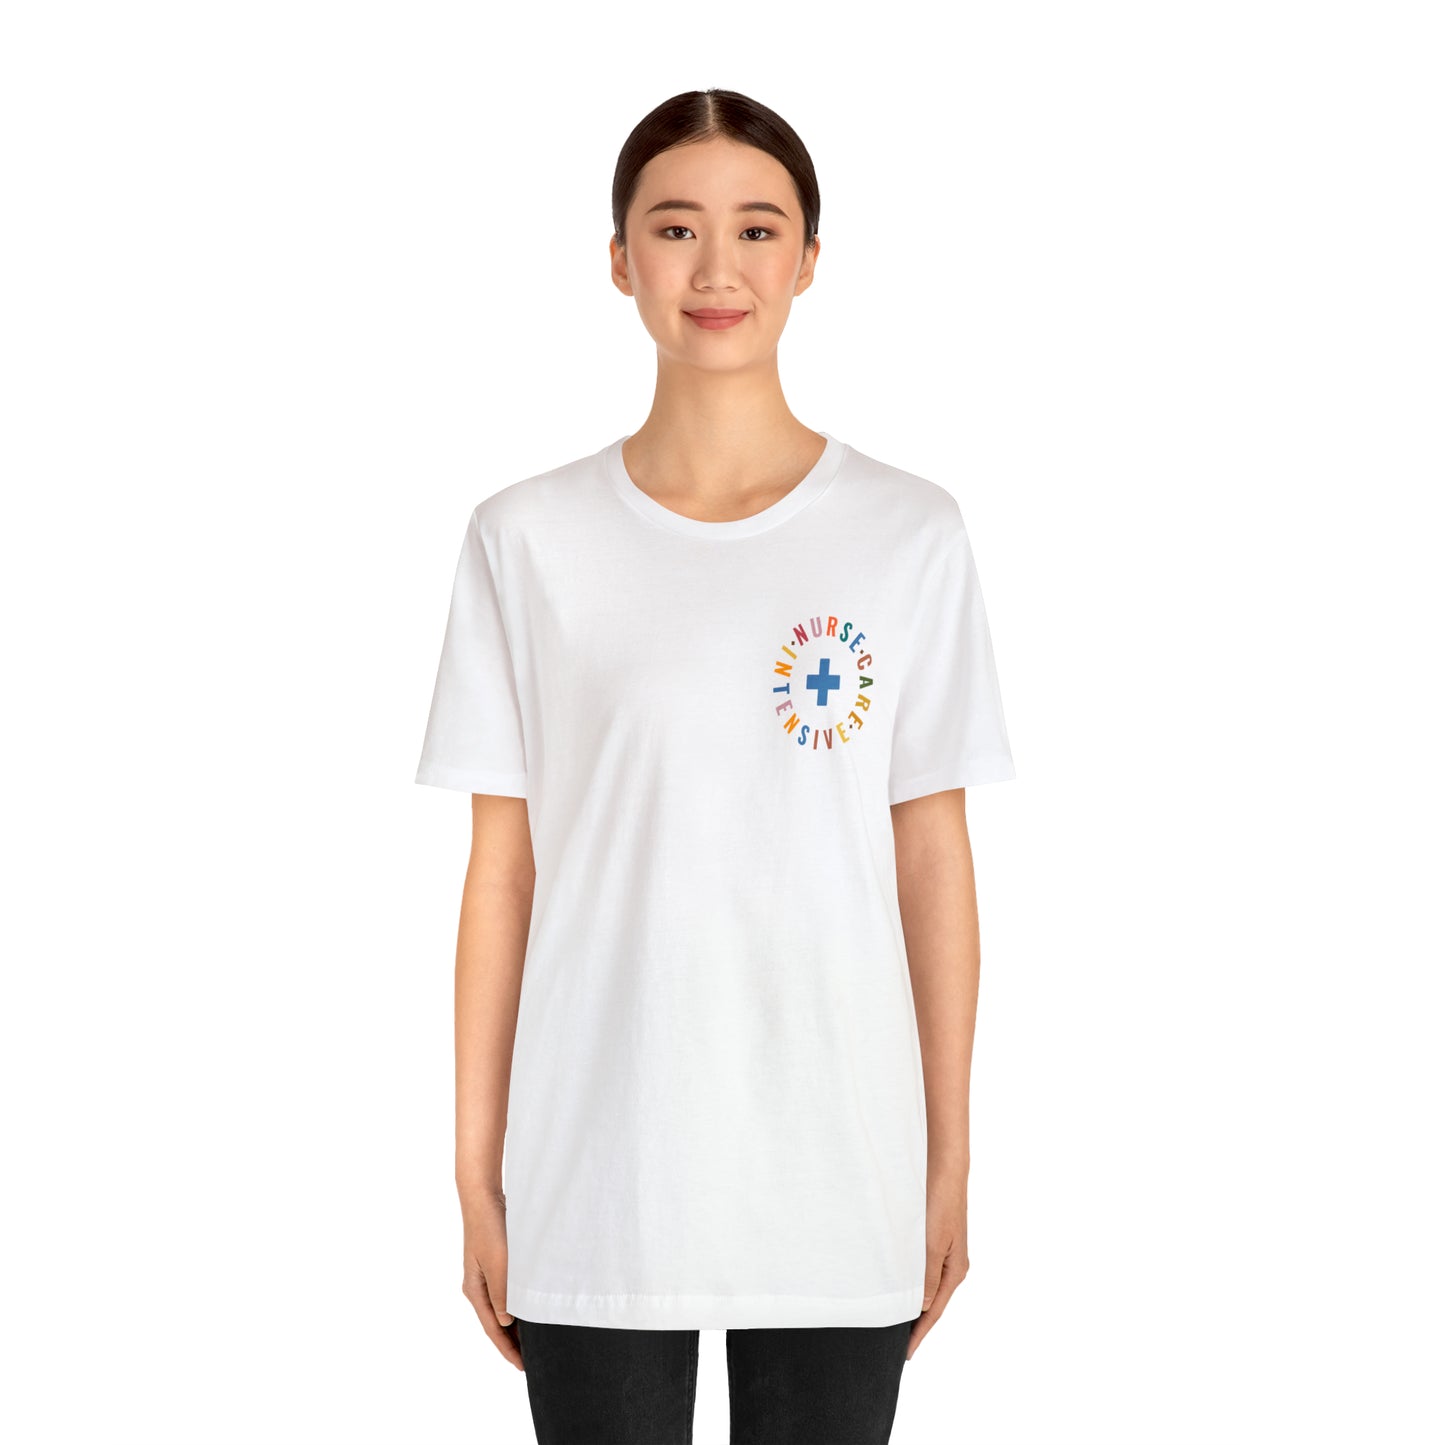 Boho ICU Nurse T-shirt, Gift For Nurses, Nursing Student, Clinicals Shirt, ICU Nurse, Intensive Care Nurse, T233